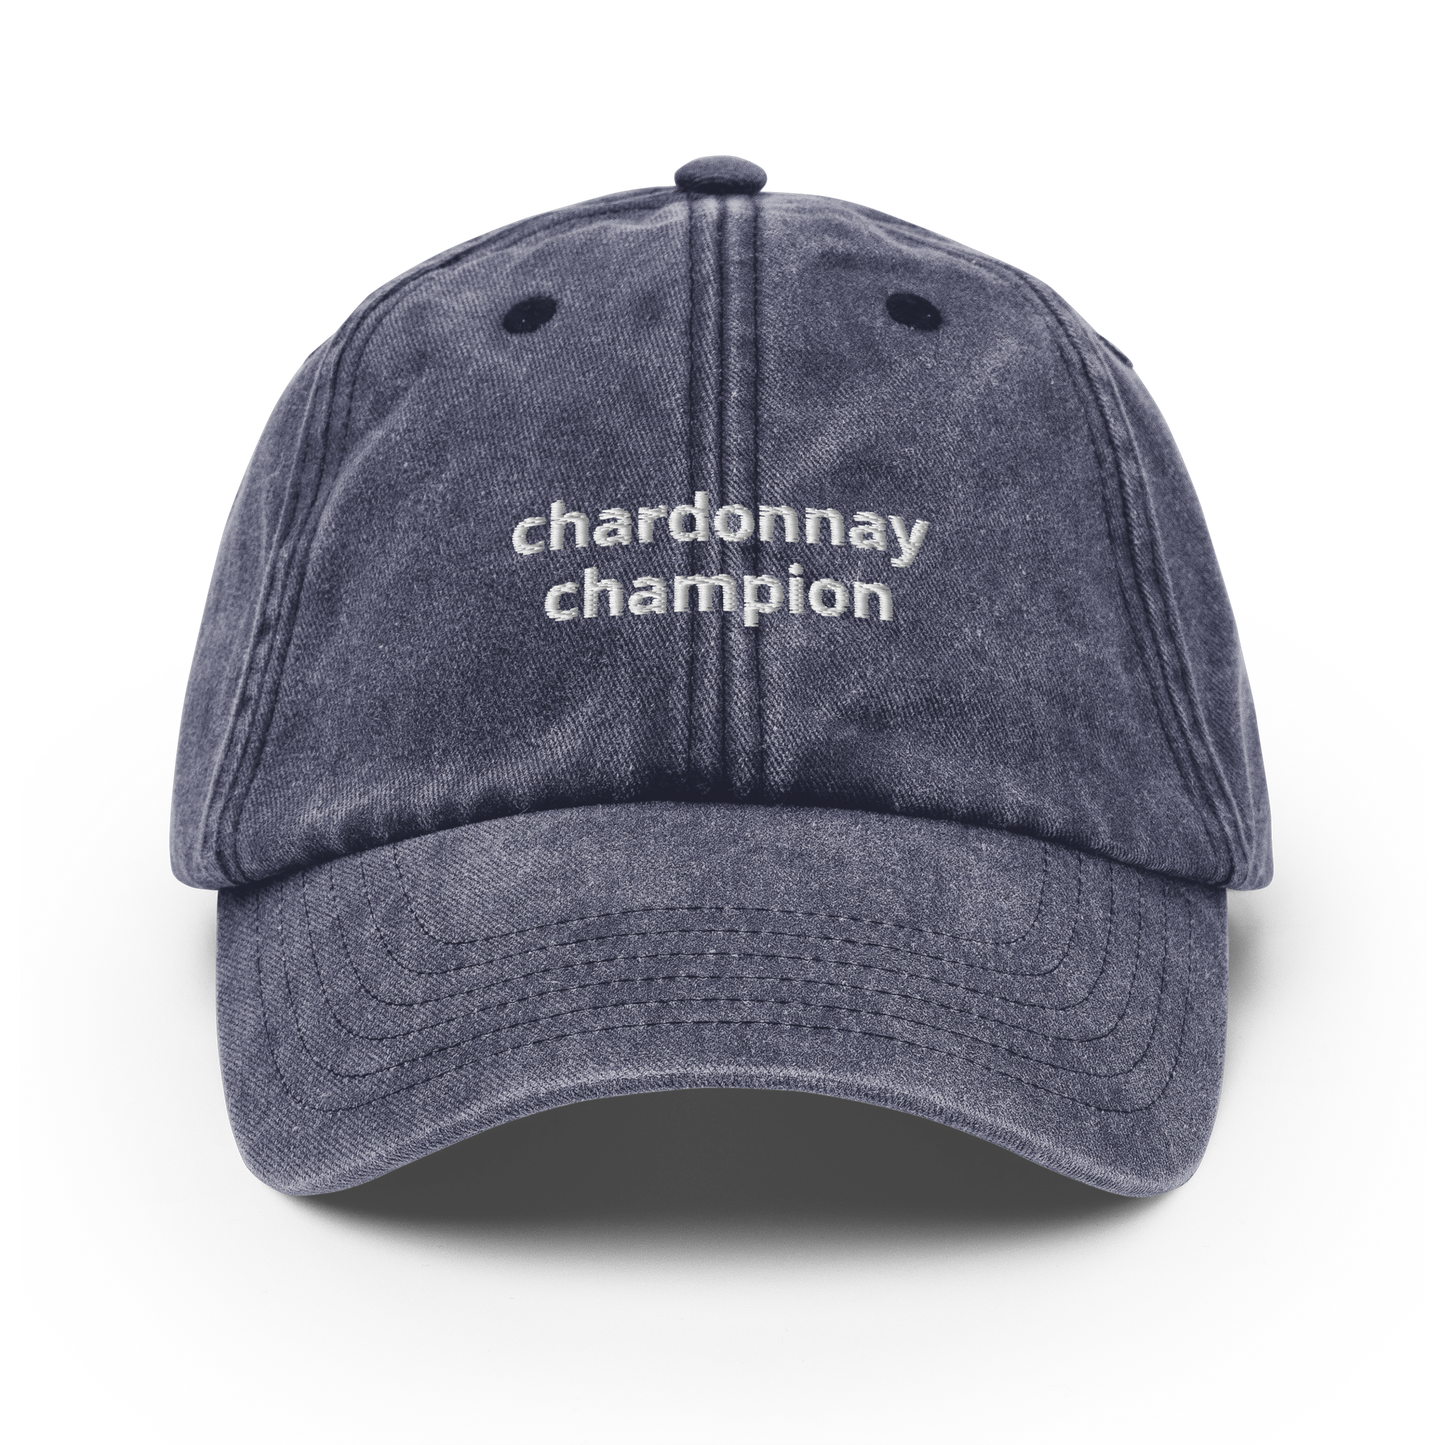 Chardonnay Champion - Vintage Hat